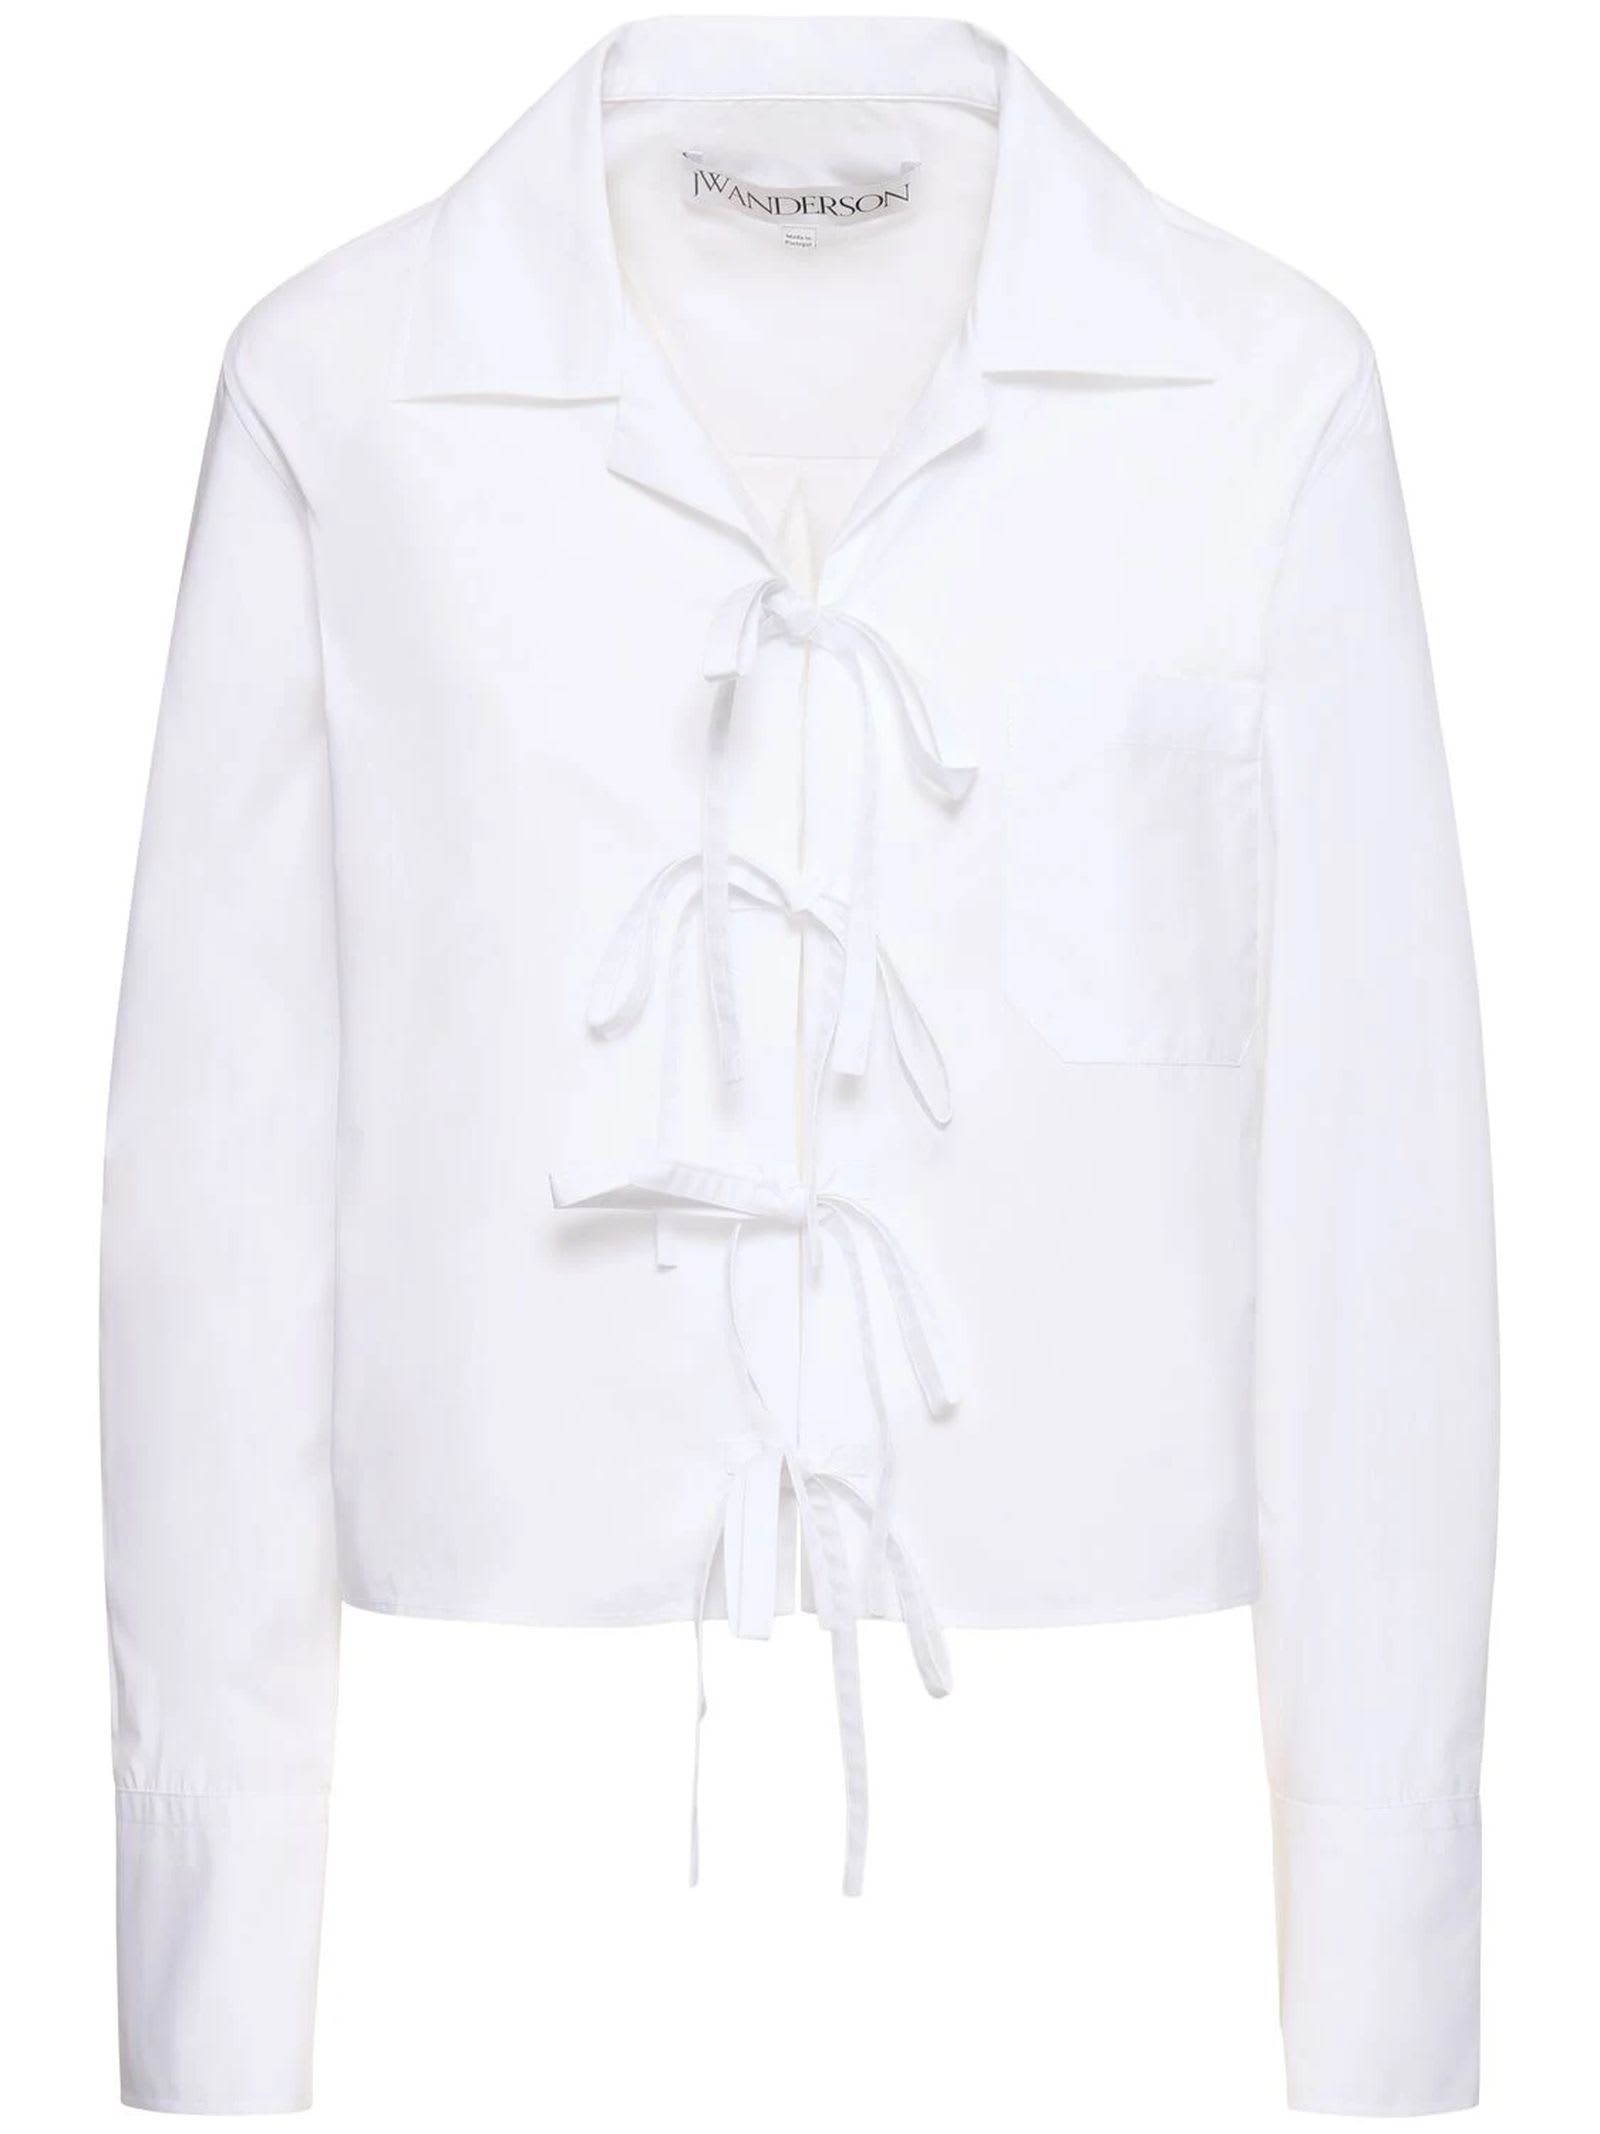 Jw Anderson White Cotton Shirt